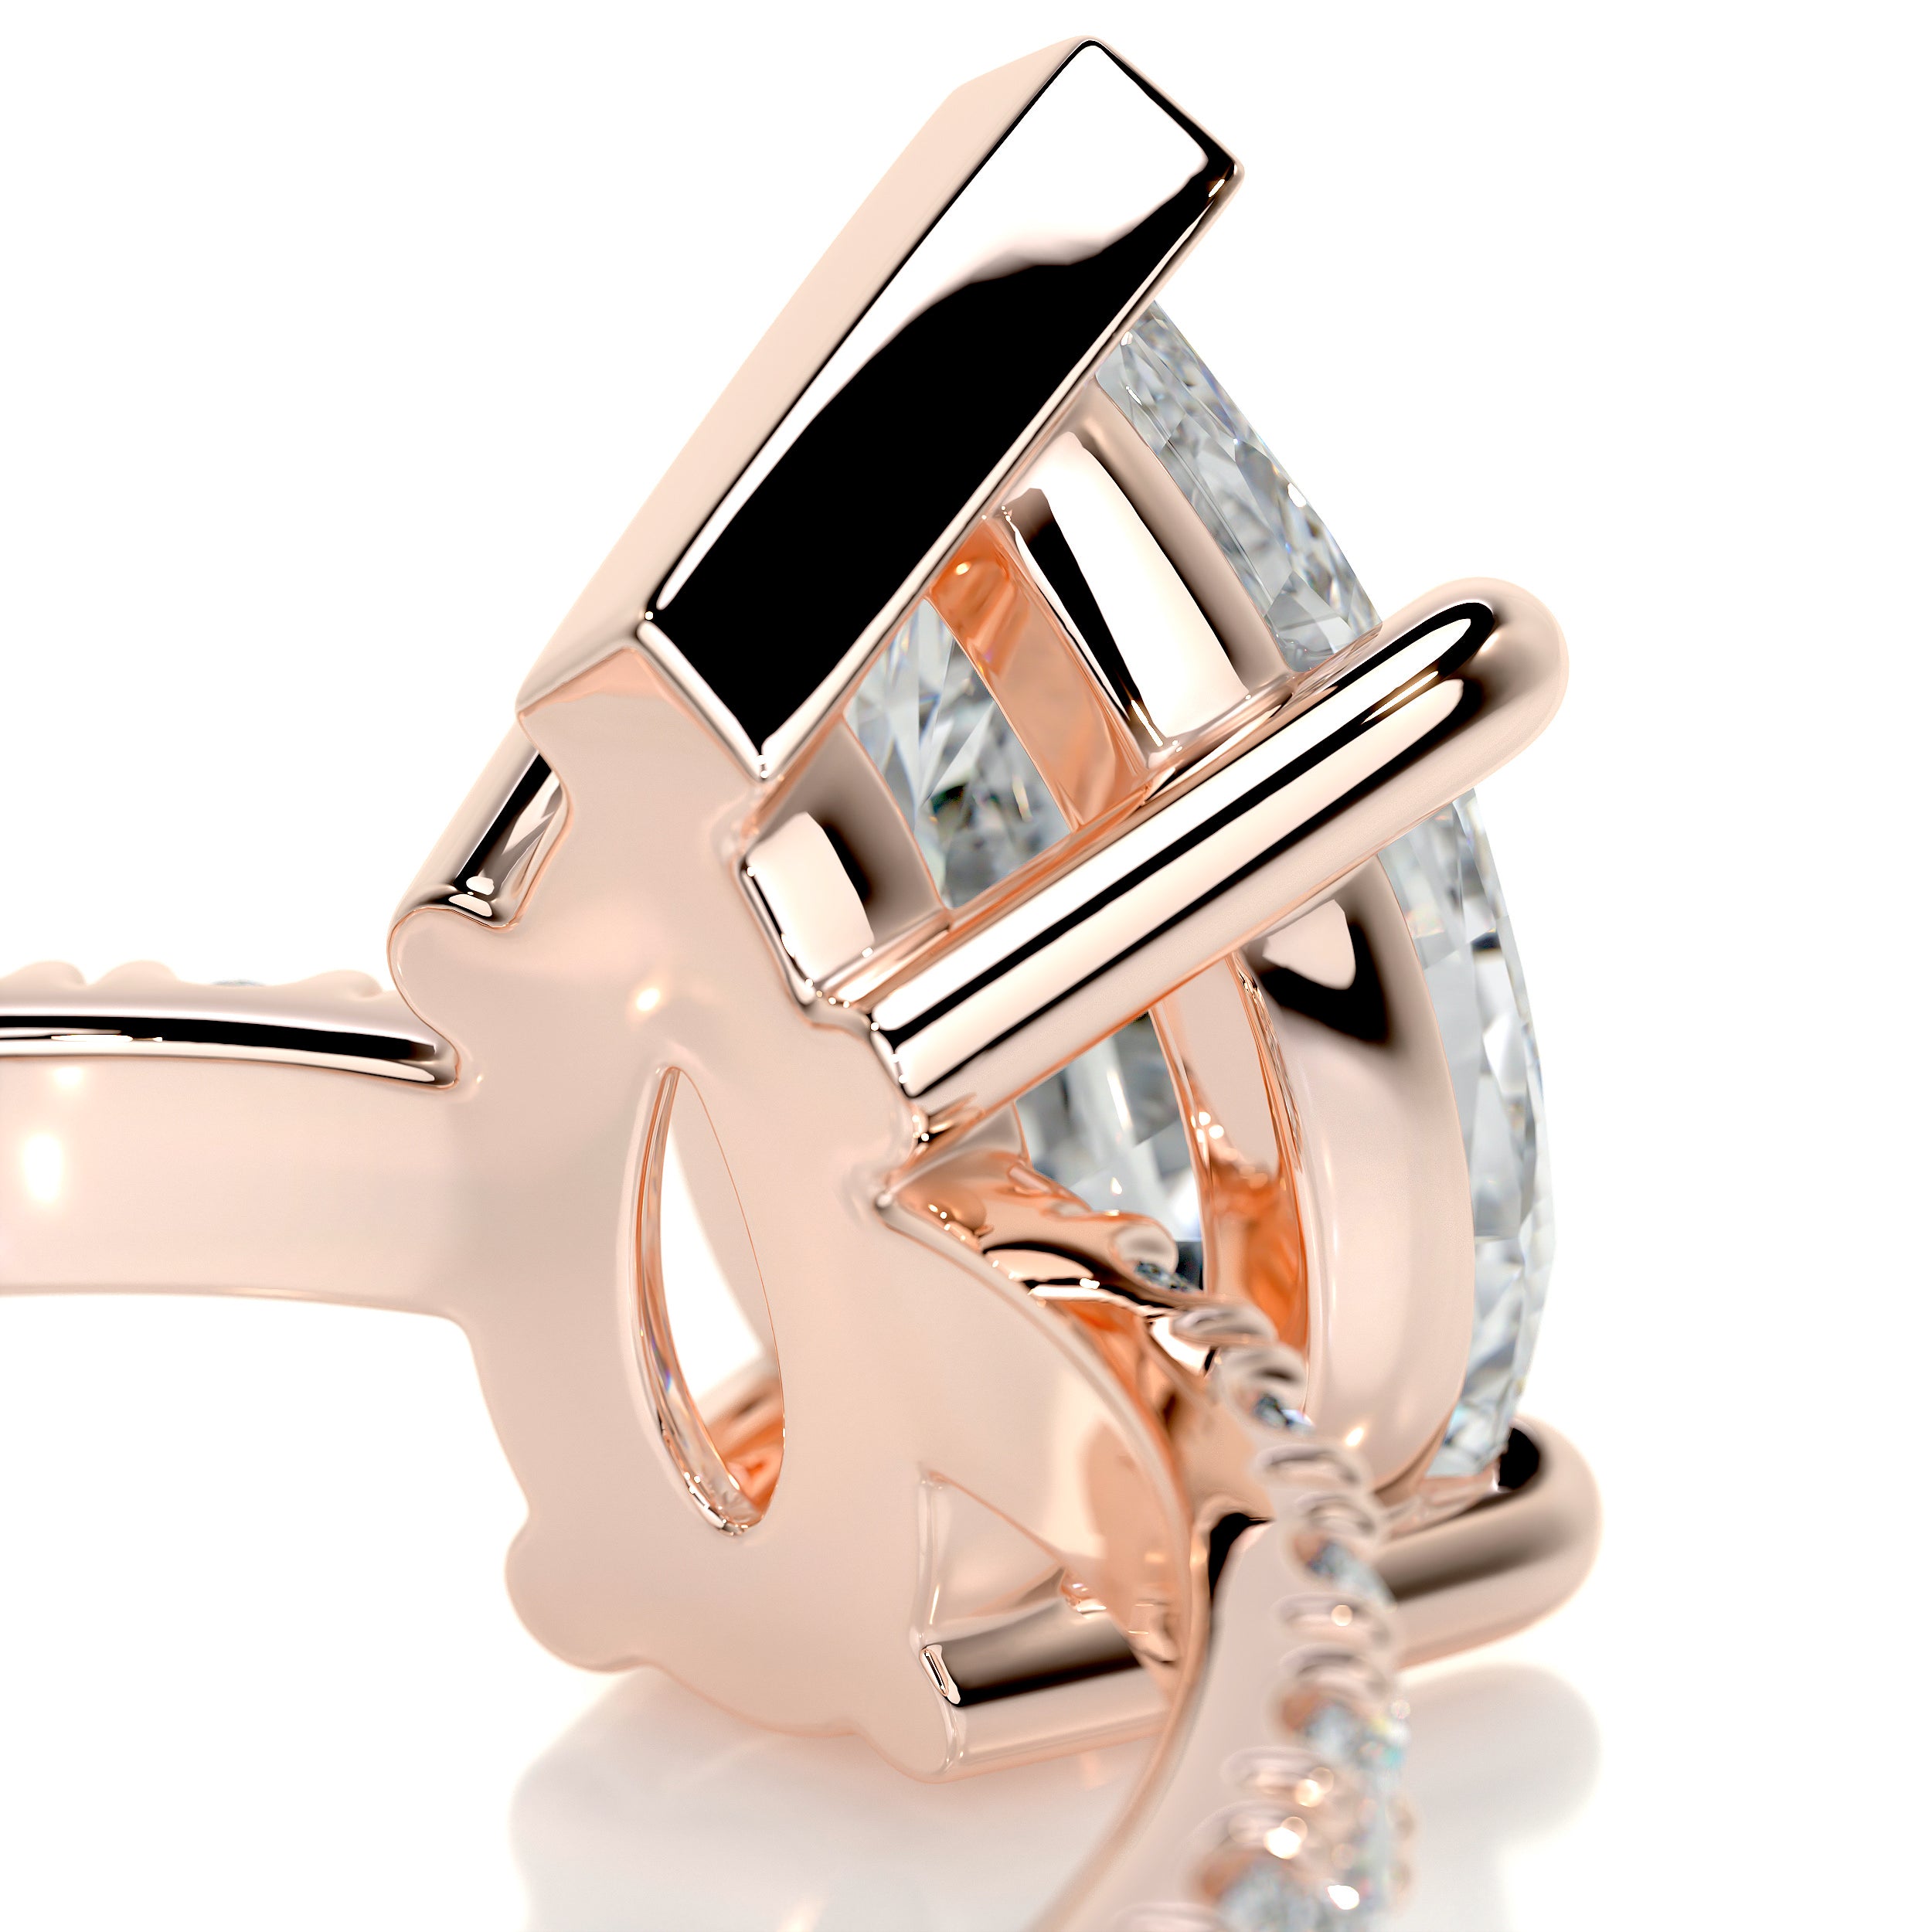 Hailey Diamond Engagement Ring -14K Rose Gold